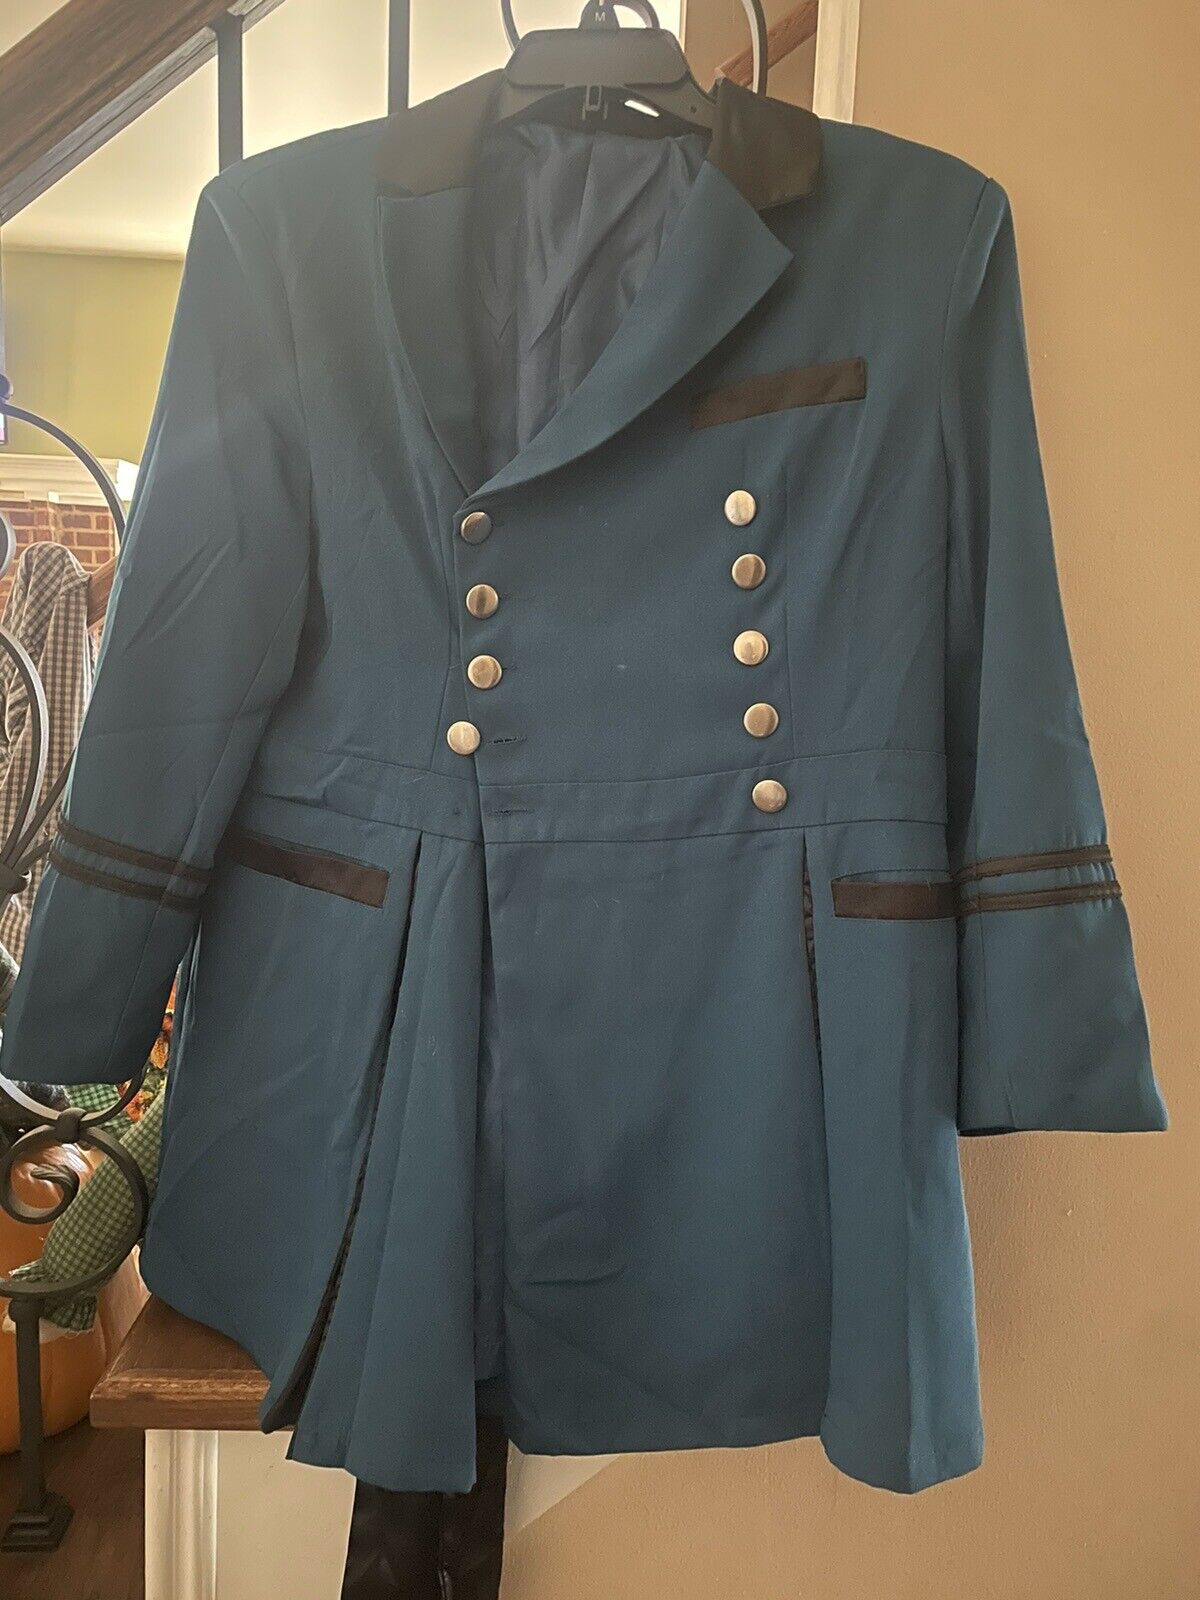 Ciel Phantomhive black butler blue coat and Shorts Set